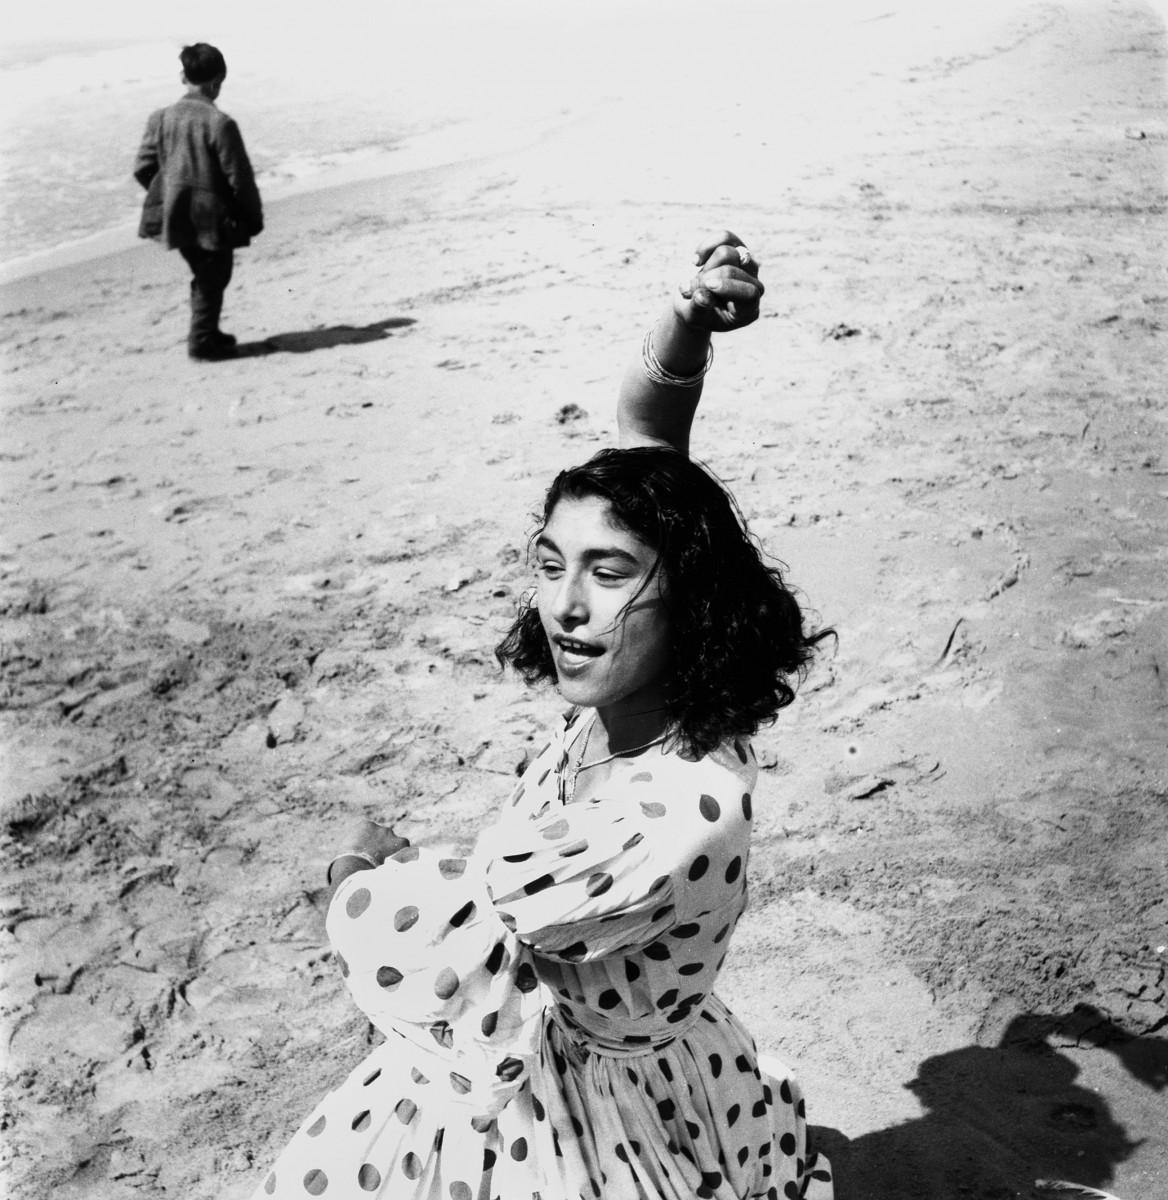 Lucien Clergue. Draga in a Polka Dot Dress, Saintes-Maries-de-la-Mer, 1957. Courtesy of the Atelier Lucien Clergue.